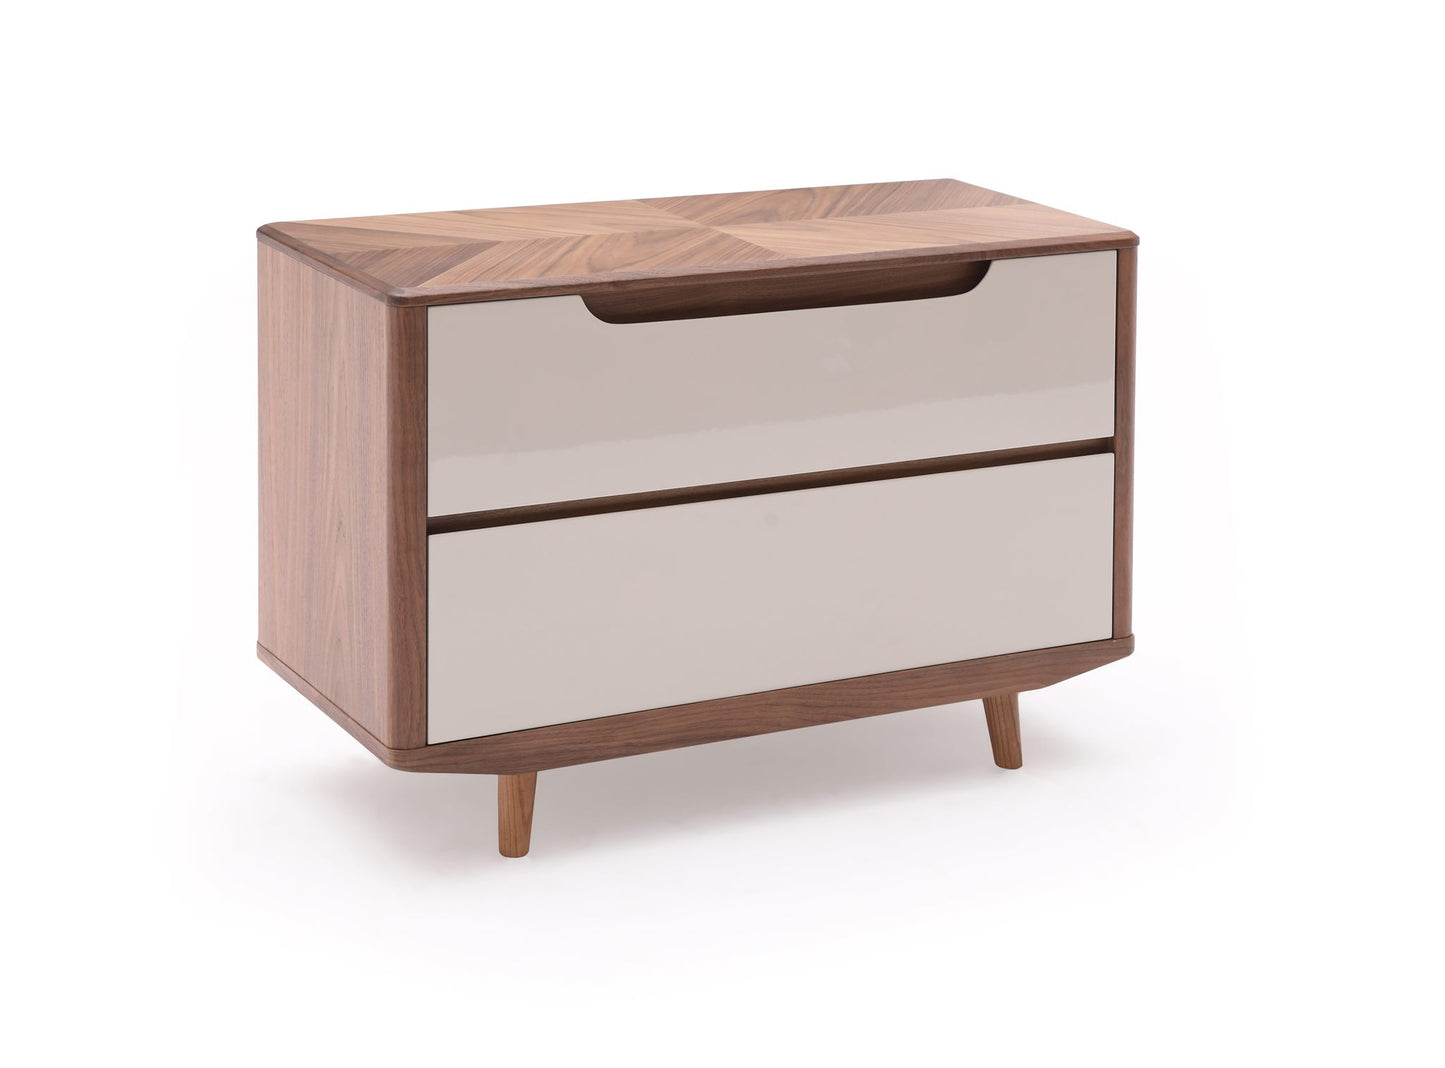 Oak Veneer Bedroom cabinet/low boy #7550 with 2 drawers - CLEARANCE SALE